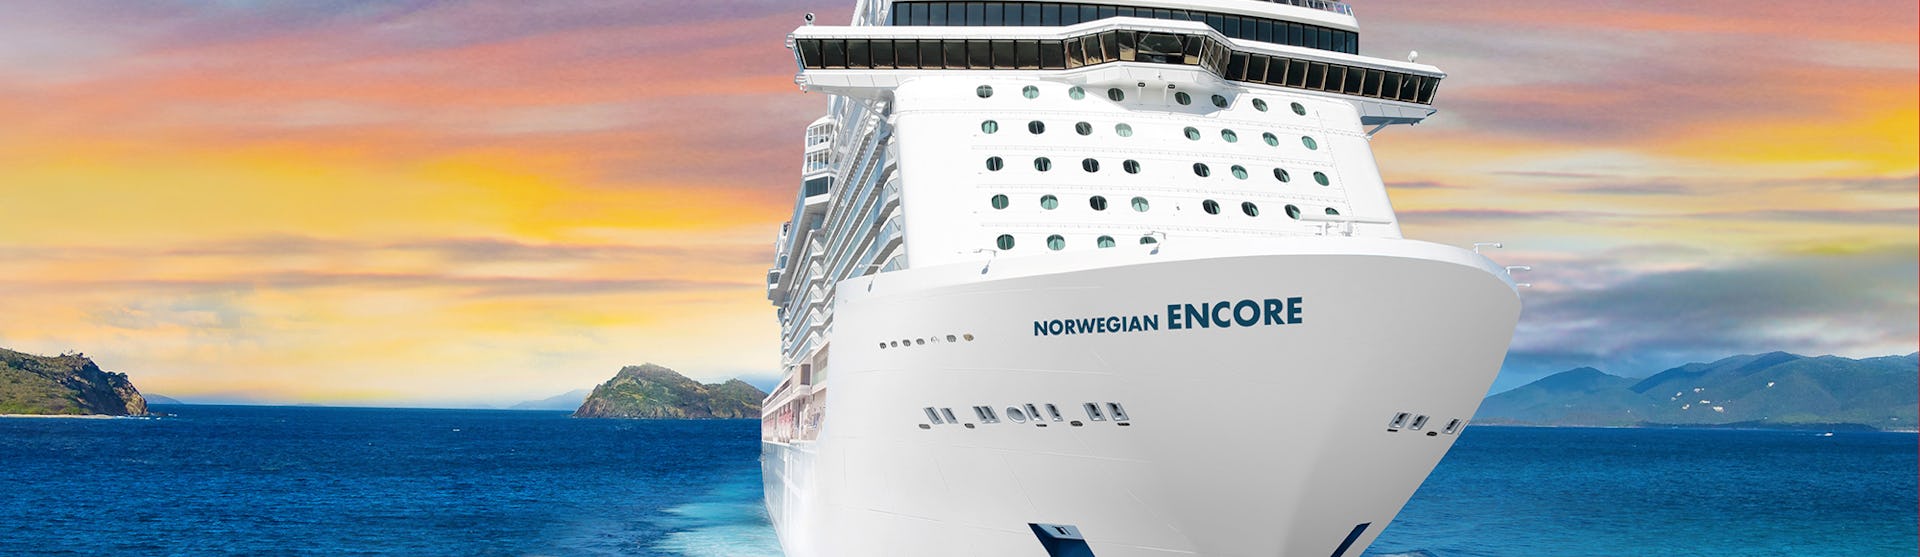 Norwegian Encore - Norwegian Cruise Line